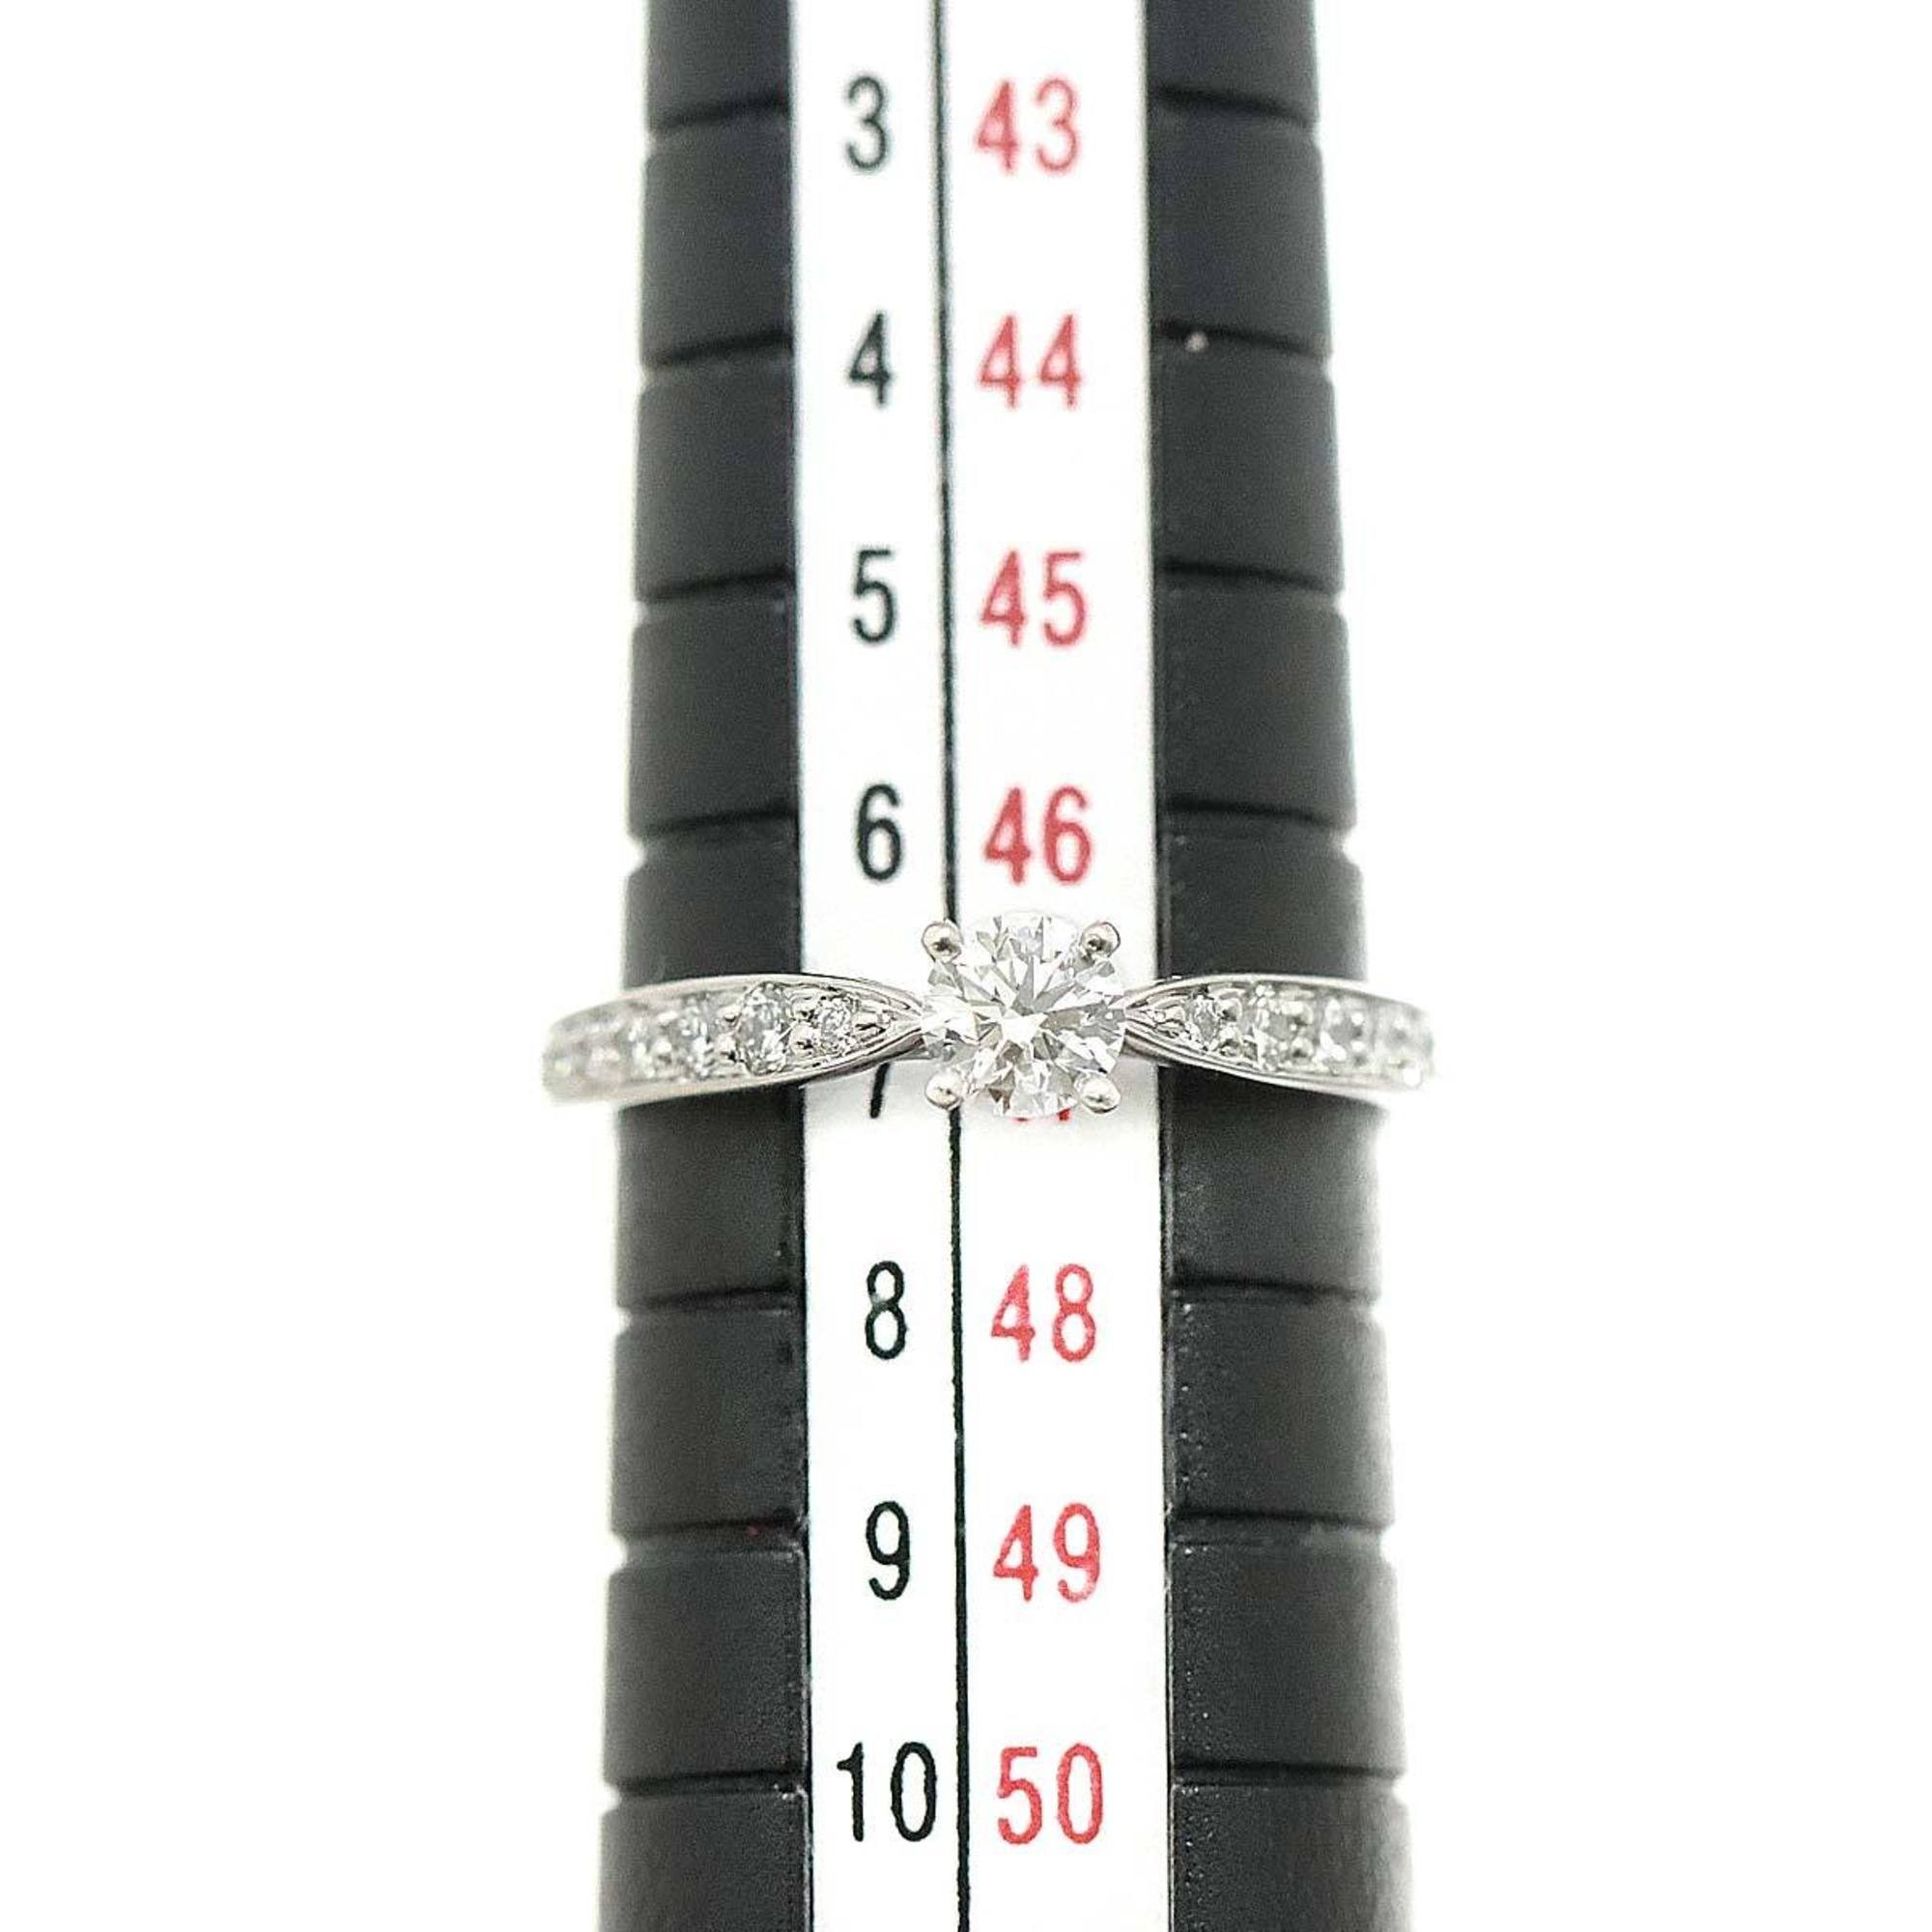 Tiffany & Co. Harmony Diamond 0.21ct F VS2 3EX Ring Pt Platinum